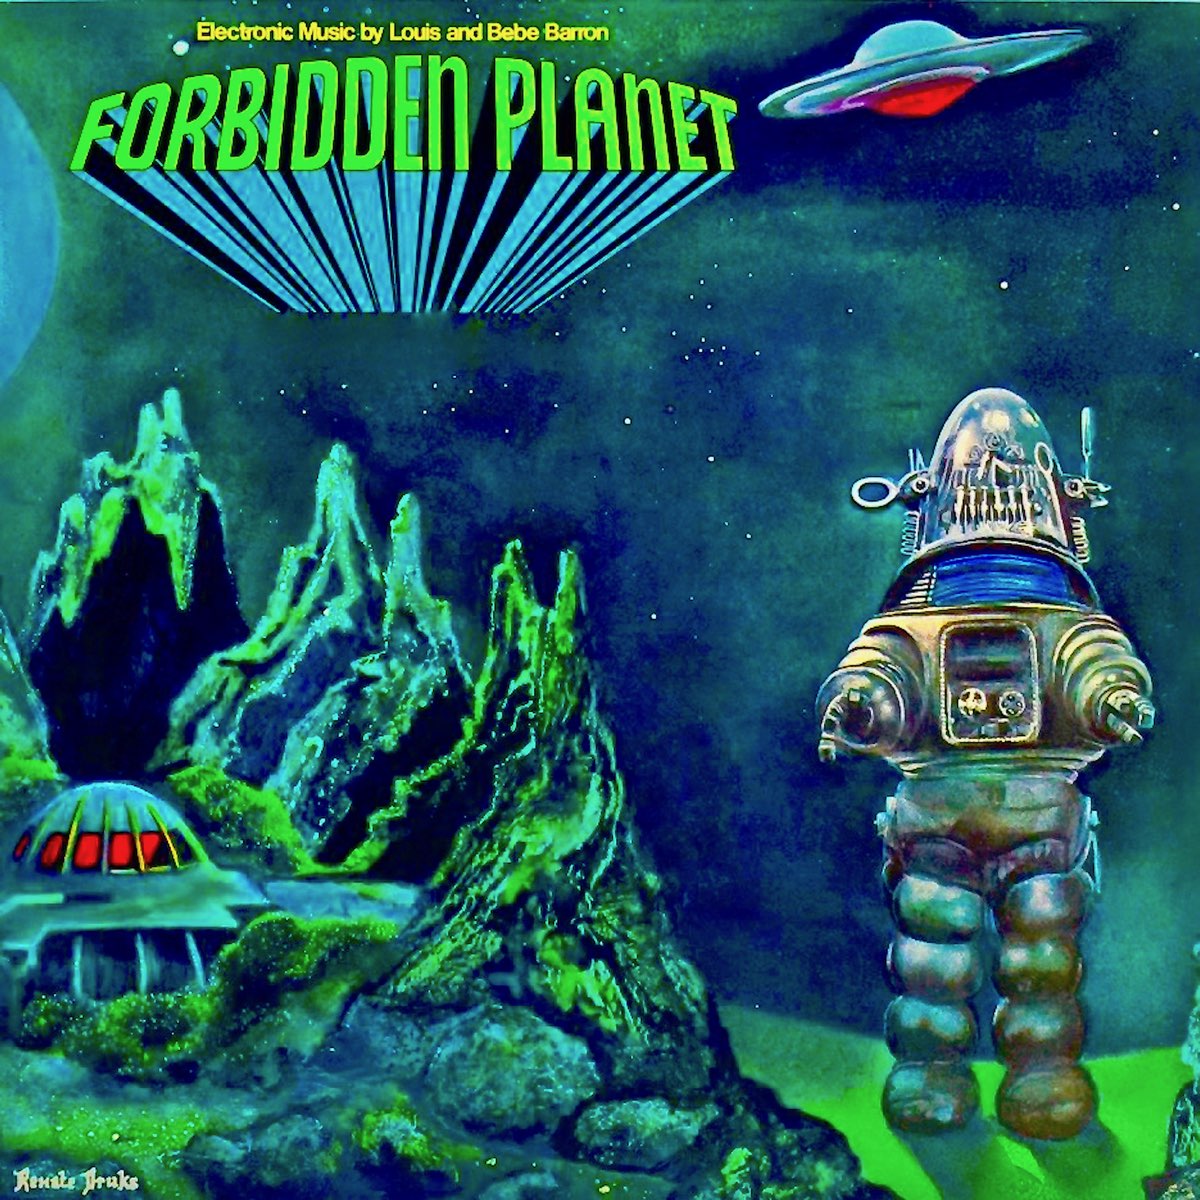 Forbidden Planet - The Original Motion Picture Soundtrack (Remastered) -  Album by Louis Barron